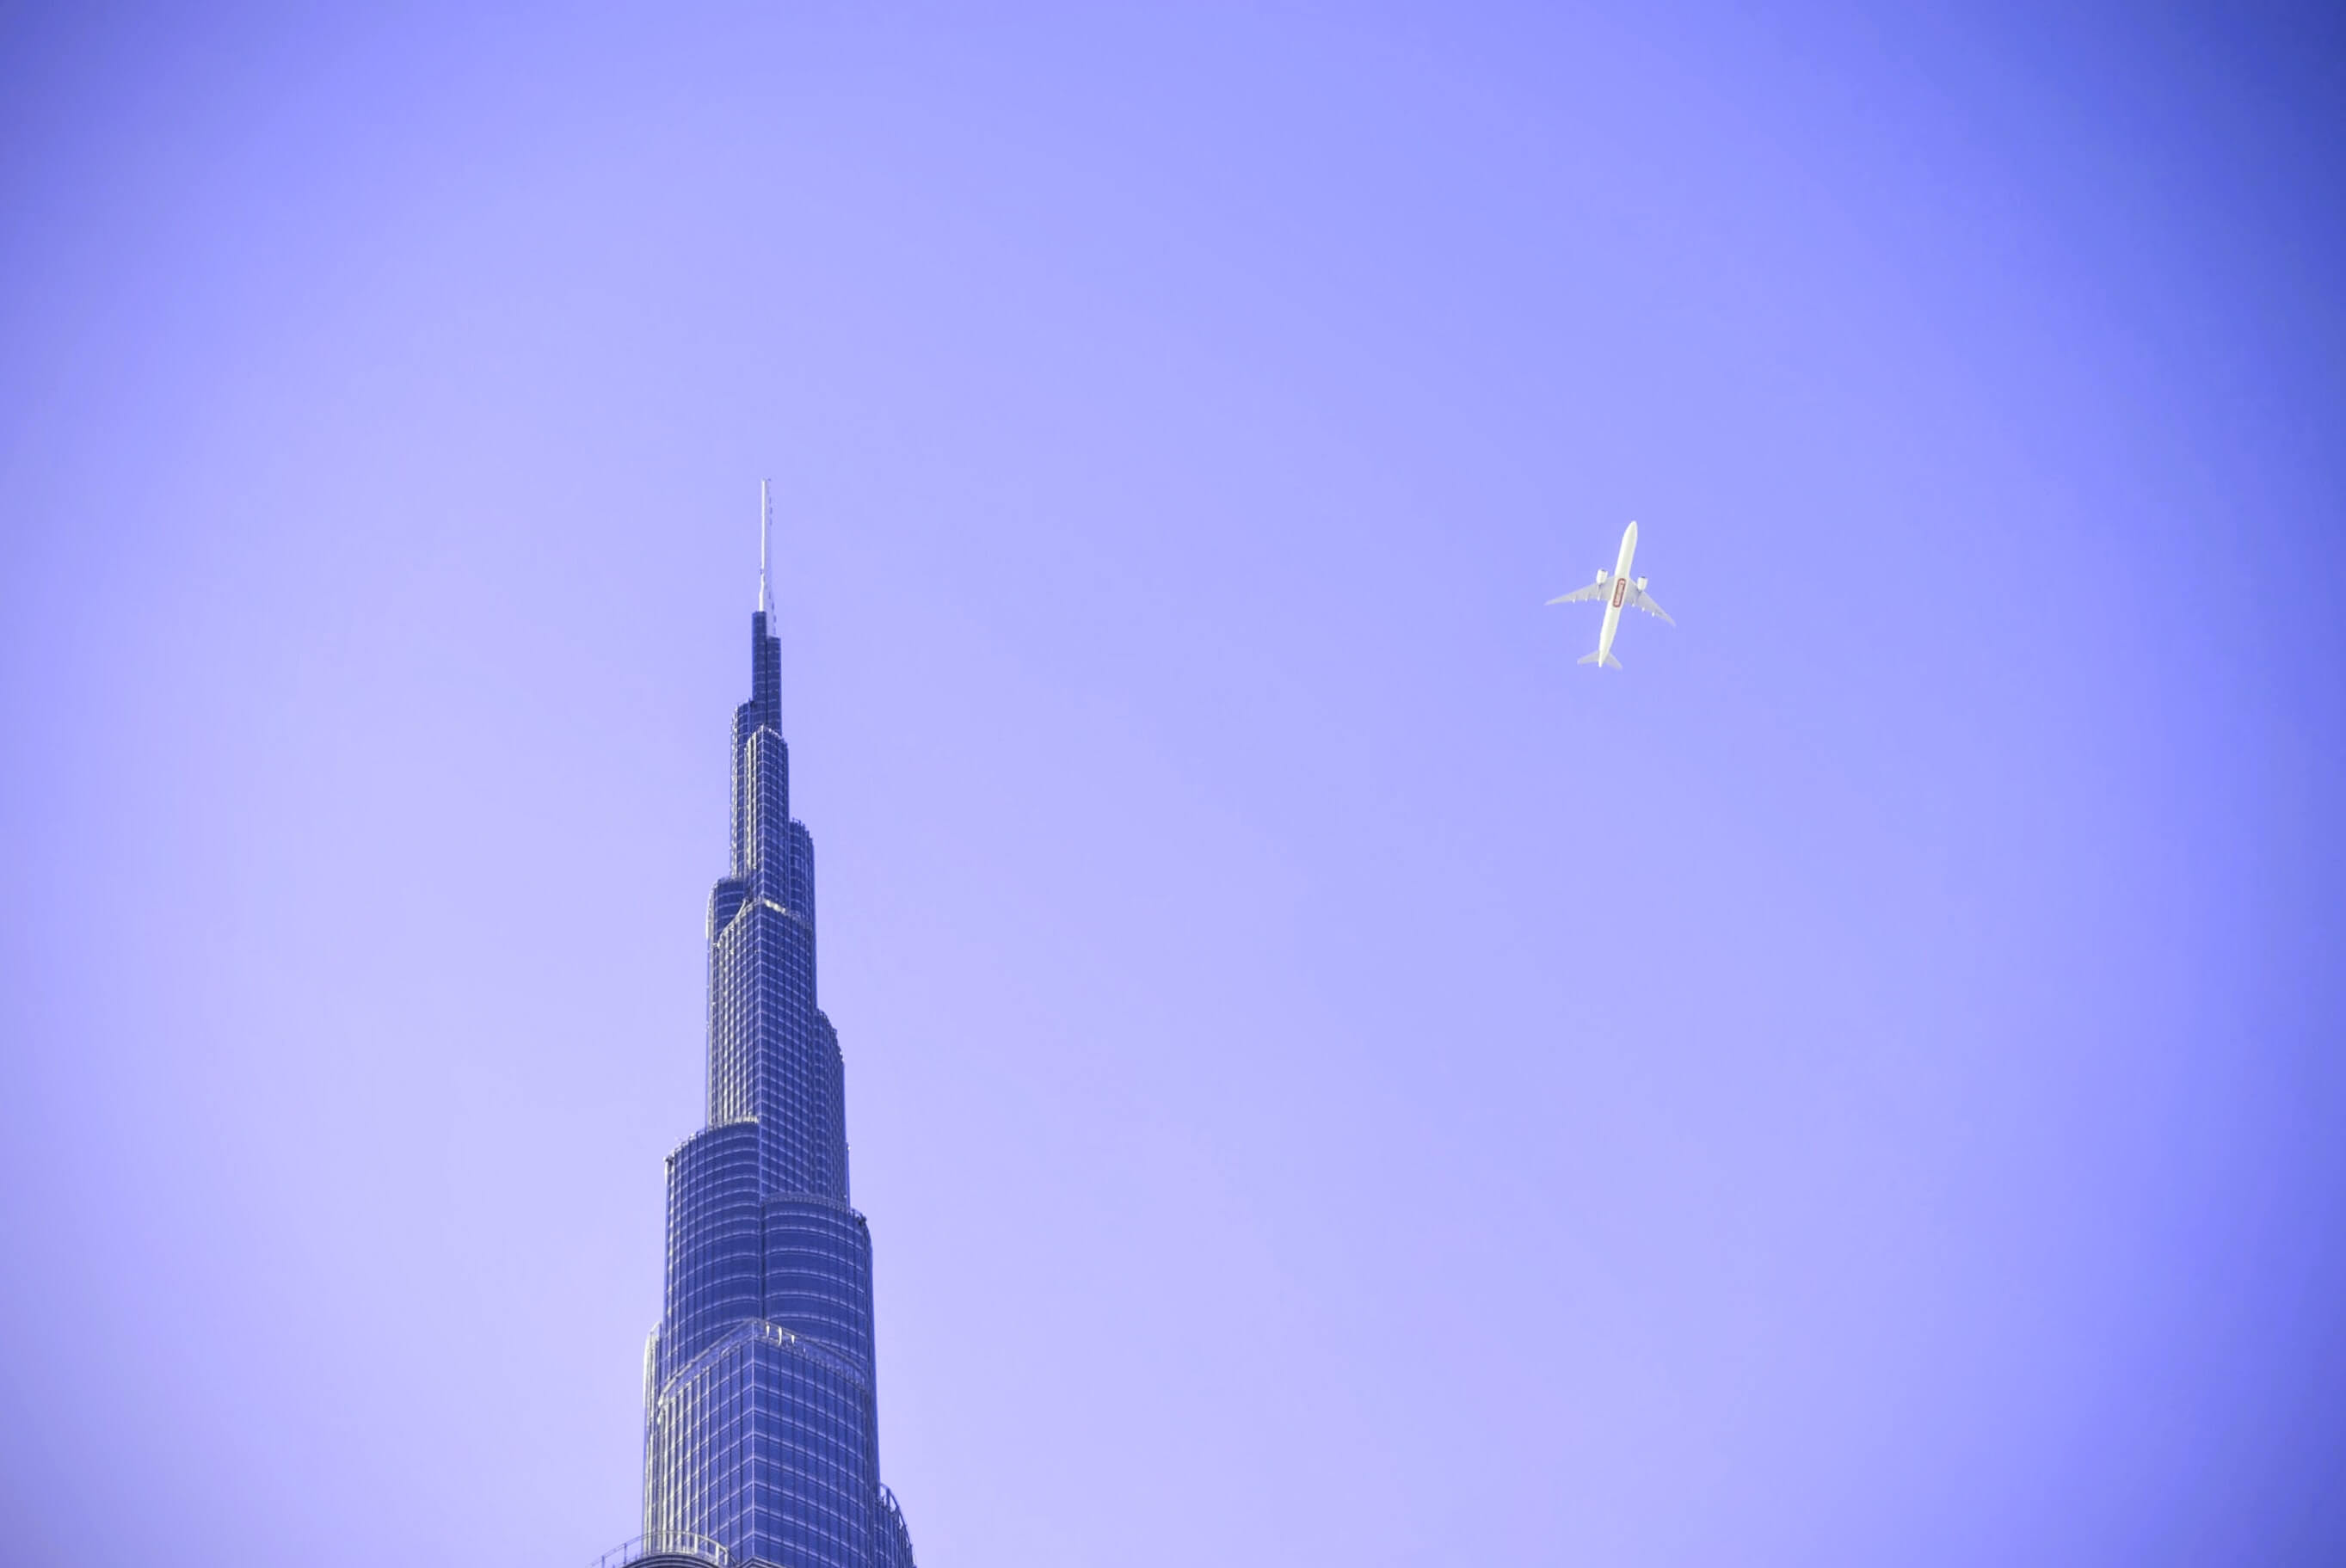 Emirates 777 over the Burj Khalifa Dubai